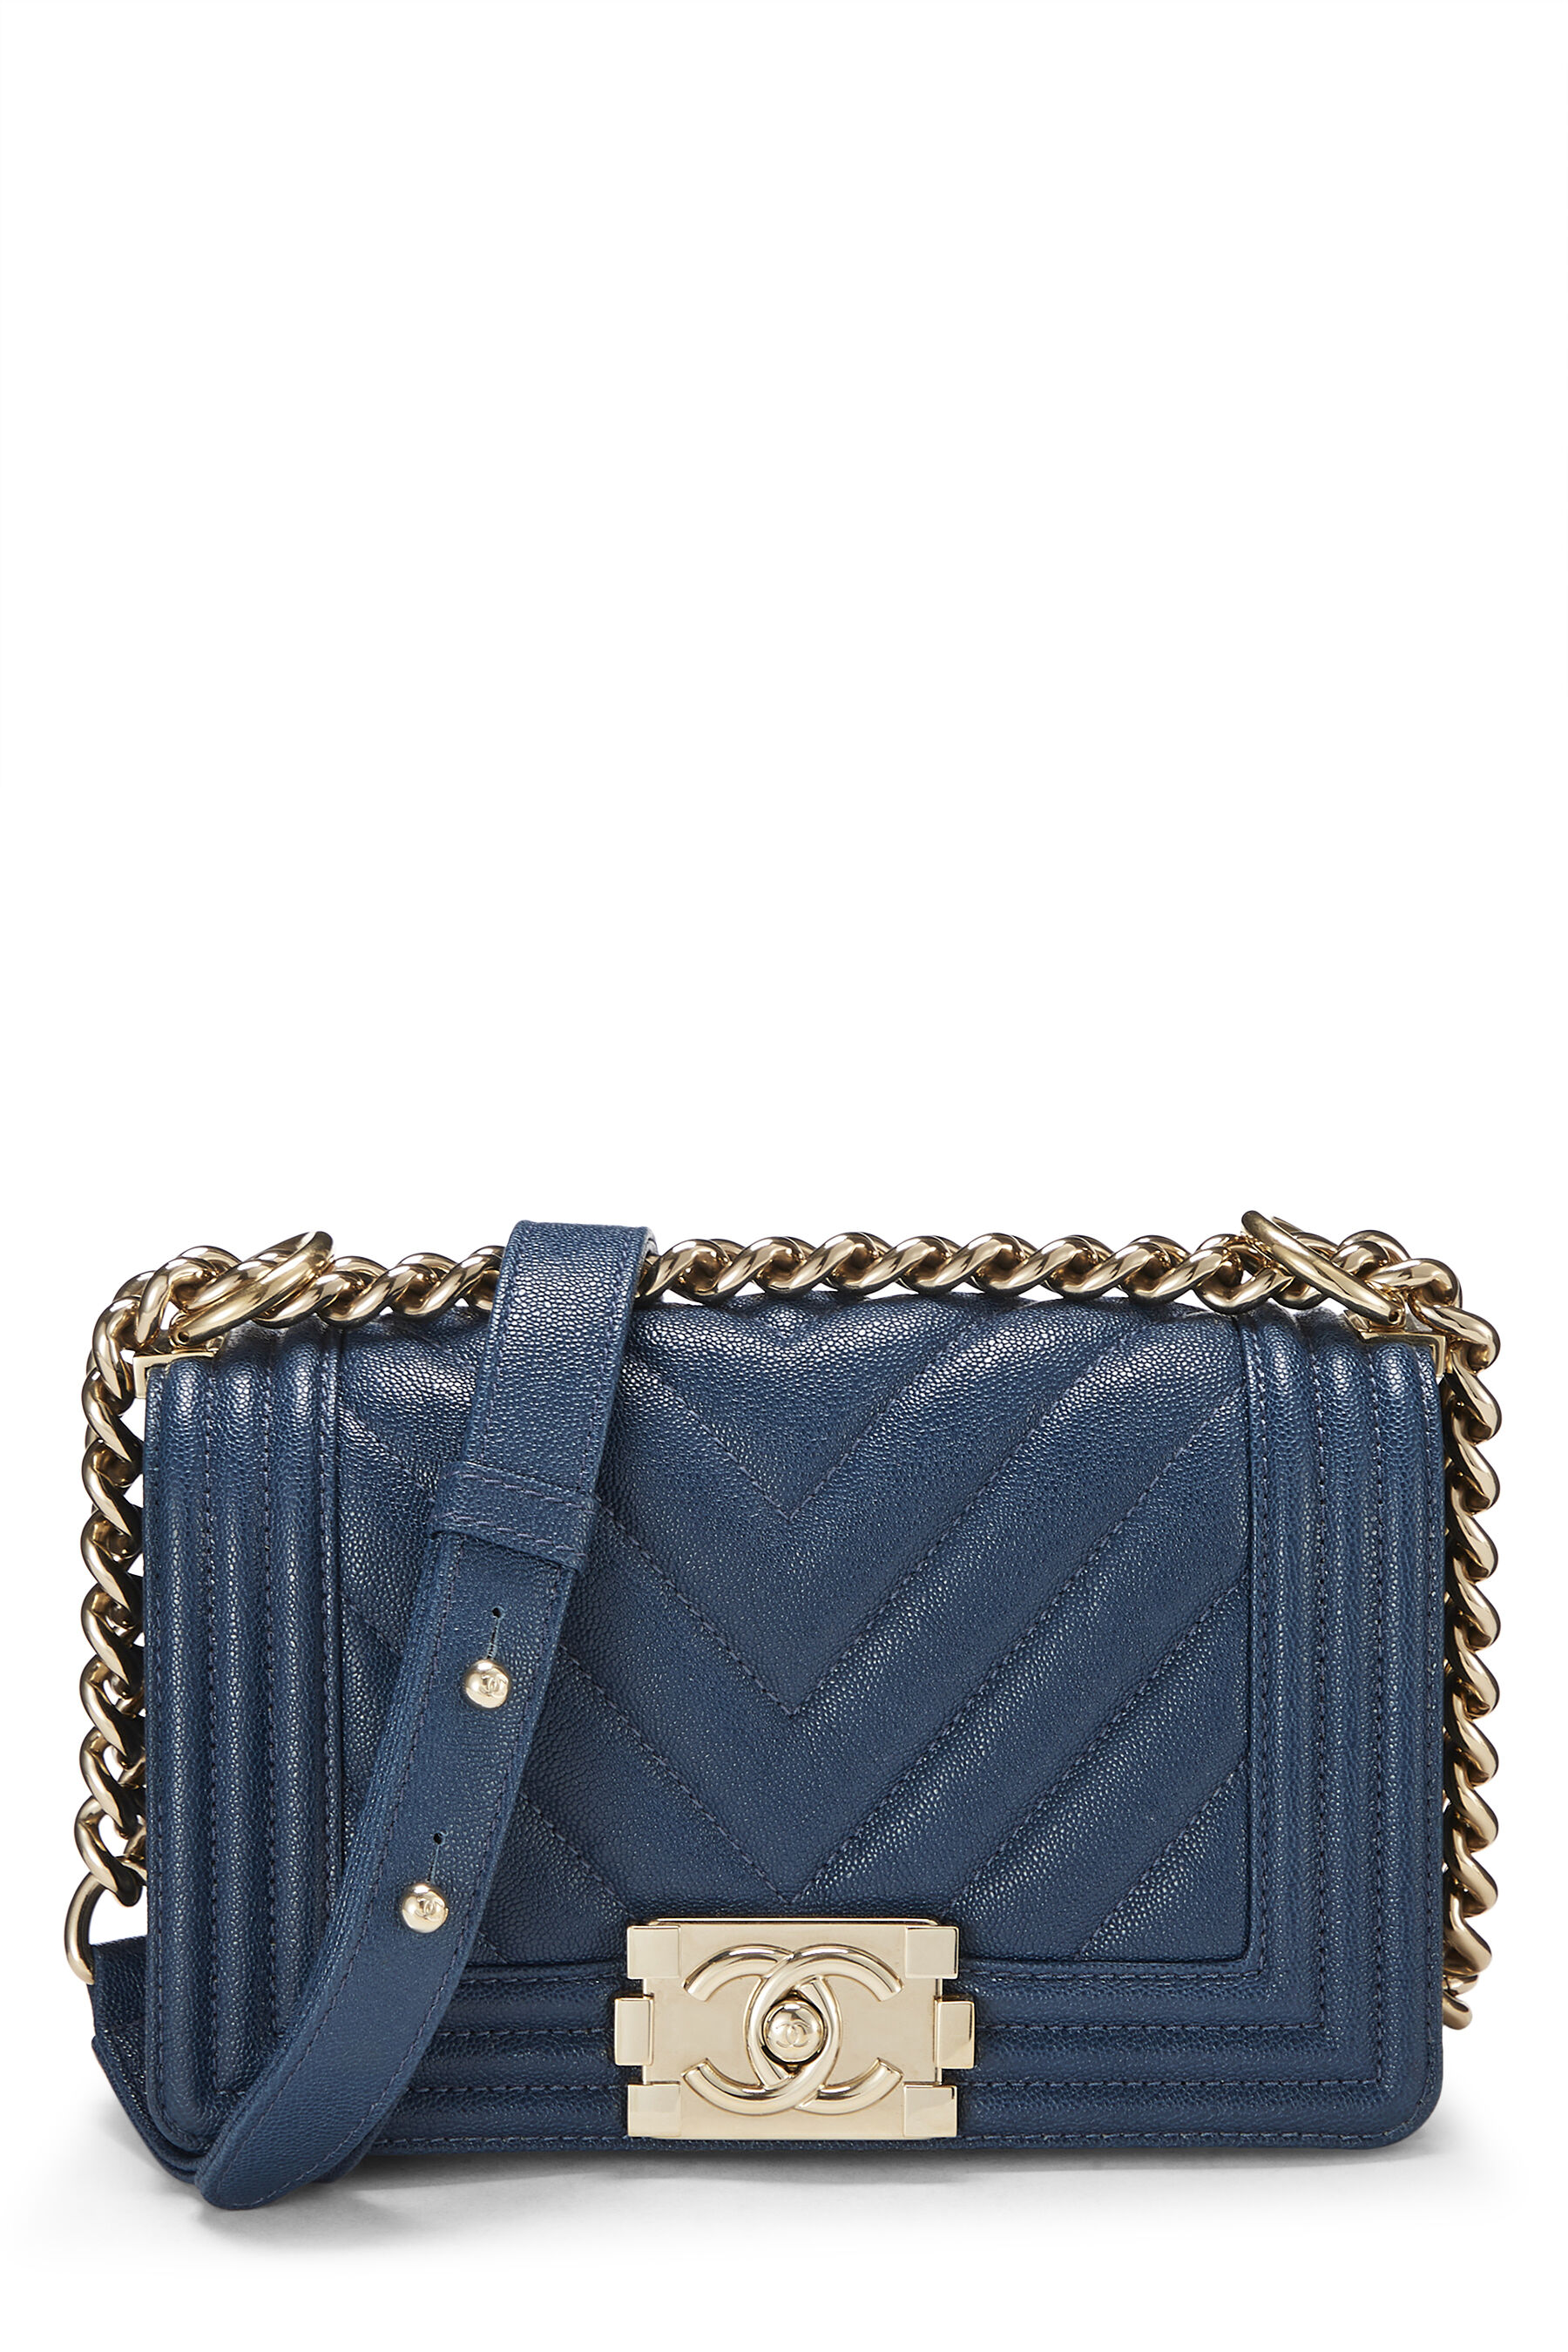 Chanel - Blue Chevron Caviar Boy Bag Small